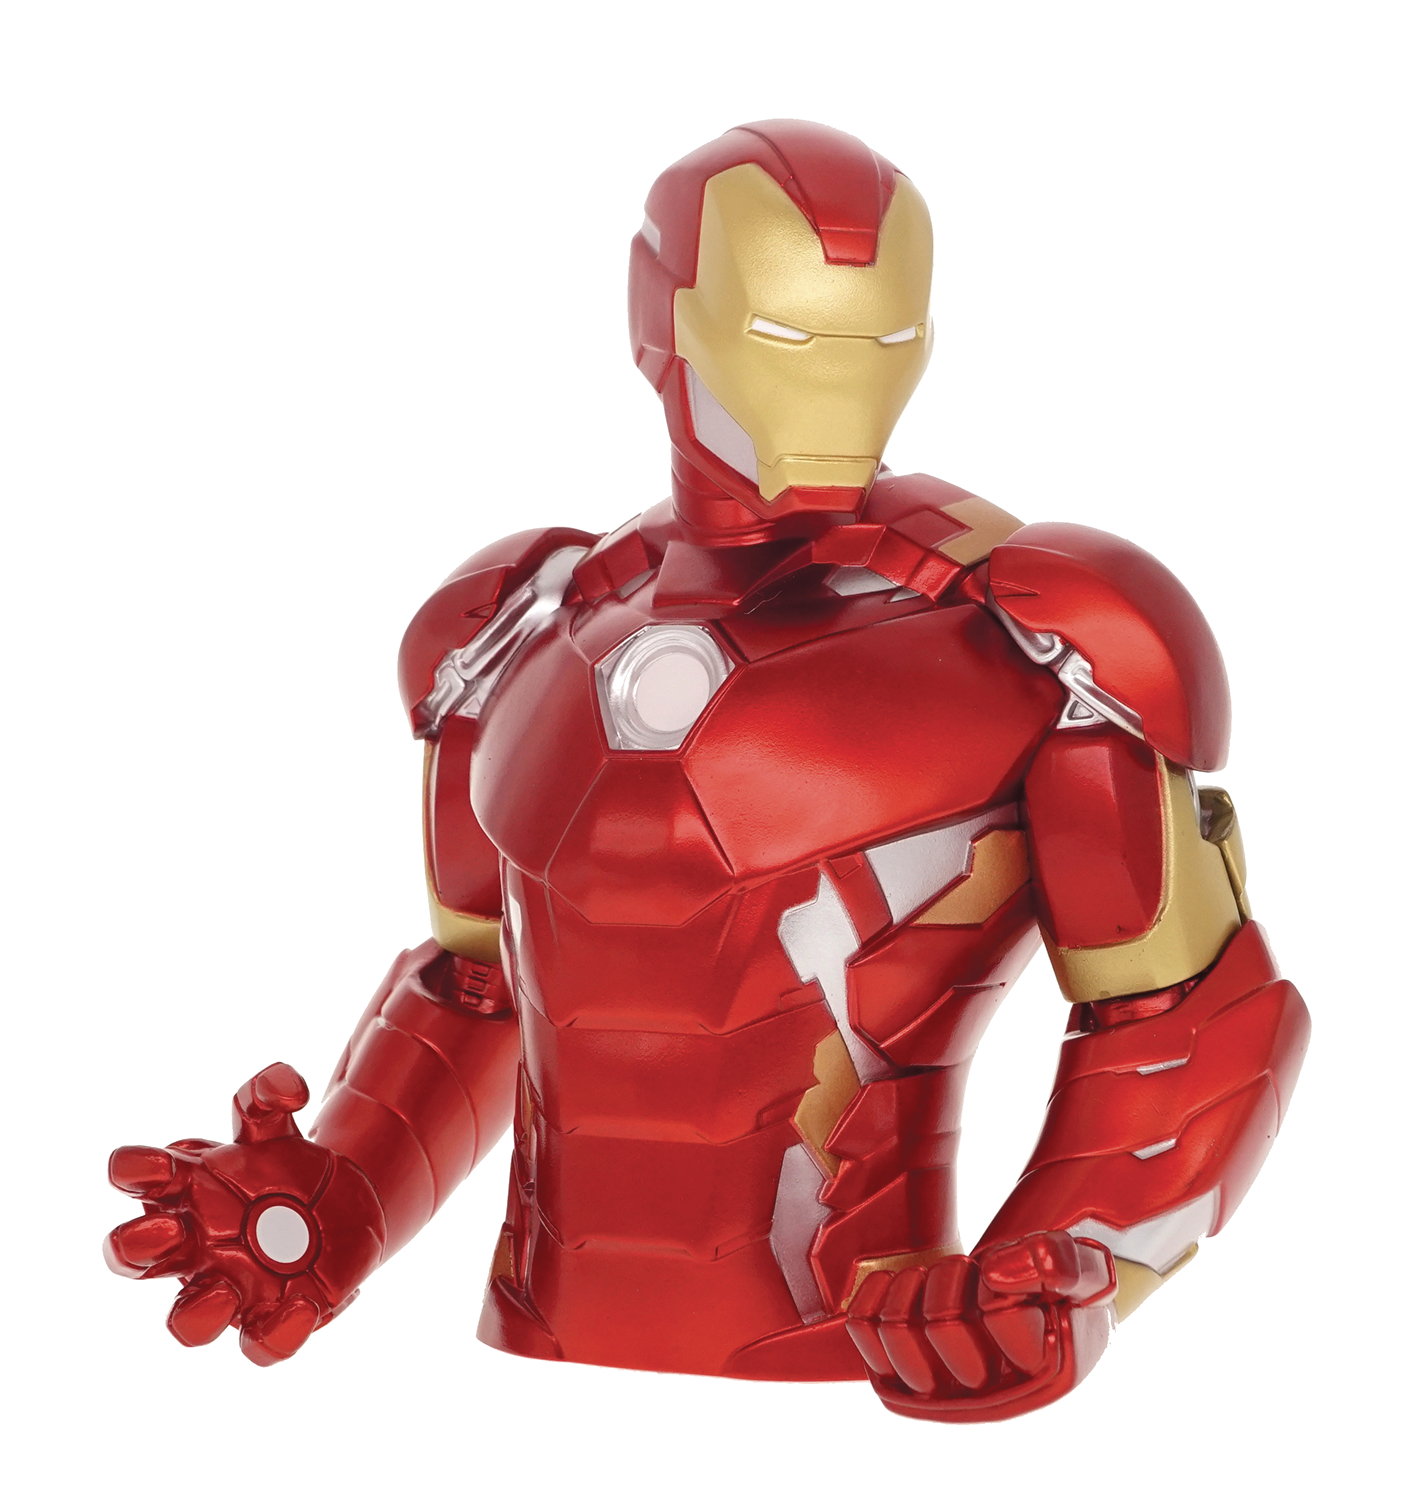 Avengers Iron Man PVC Bust Bank